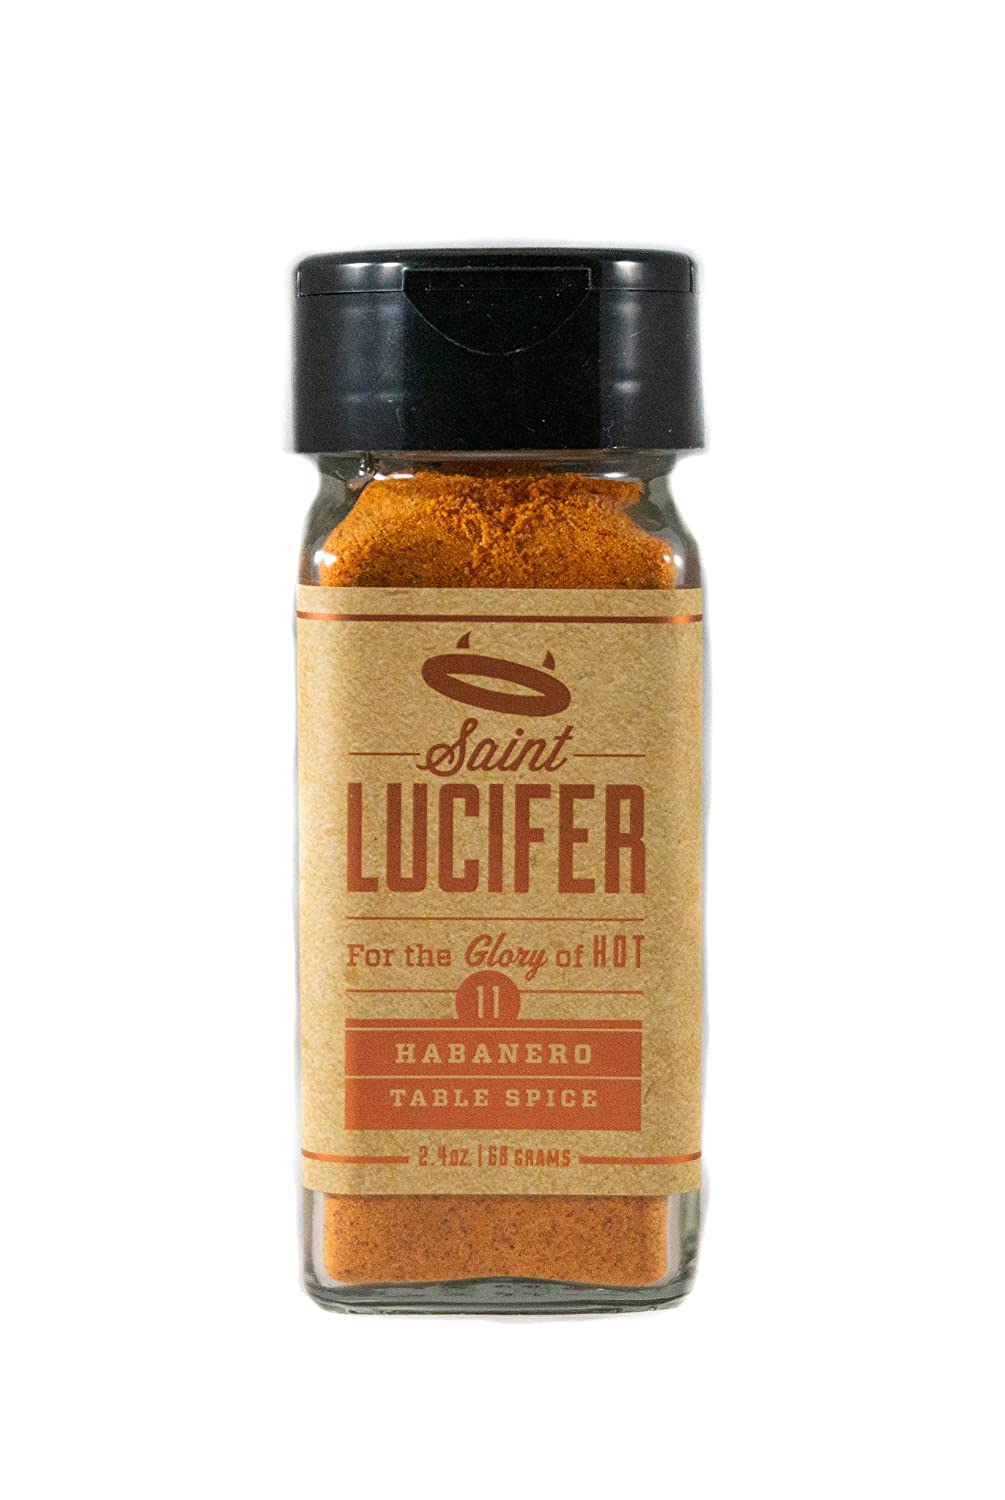 Saint Lucifer Habanero Table Spice -  2.4oz